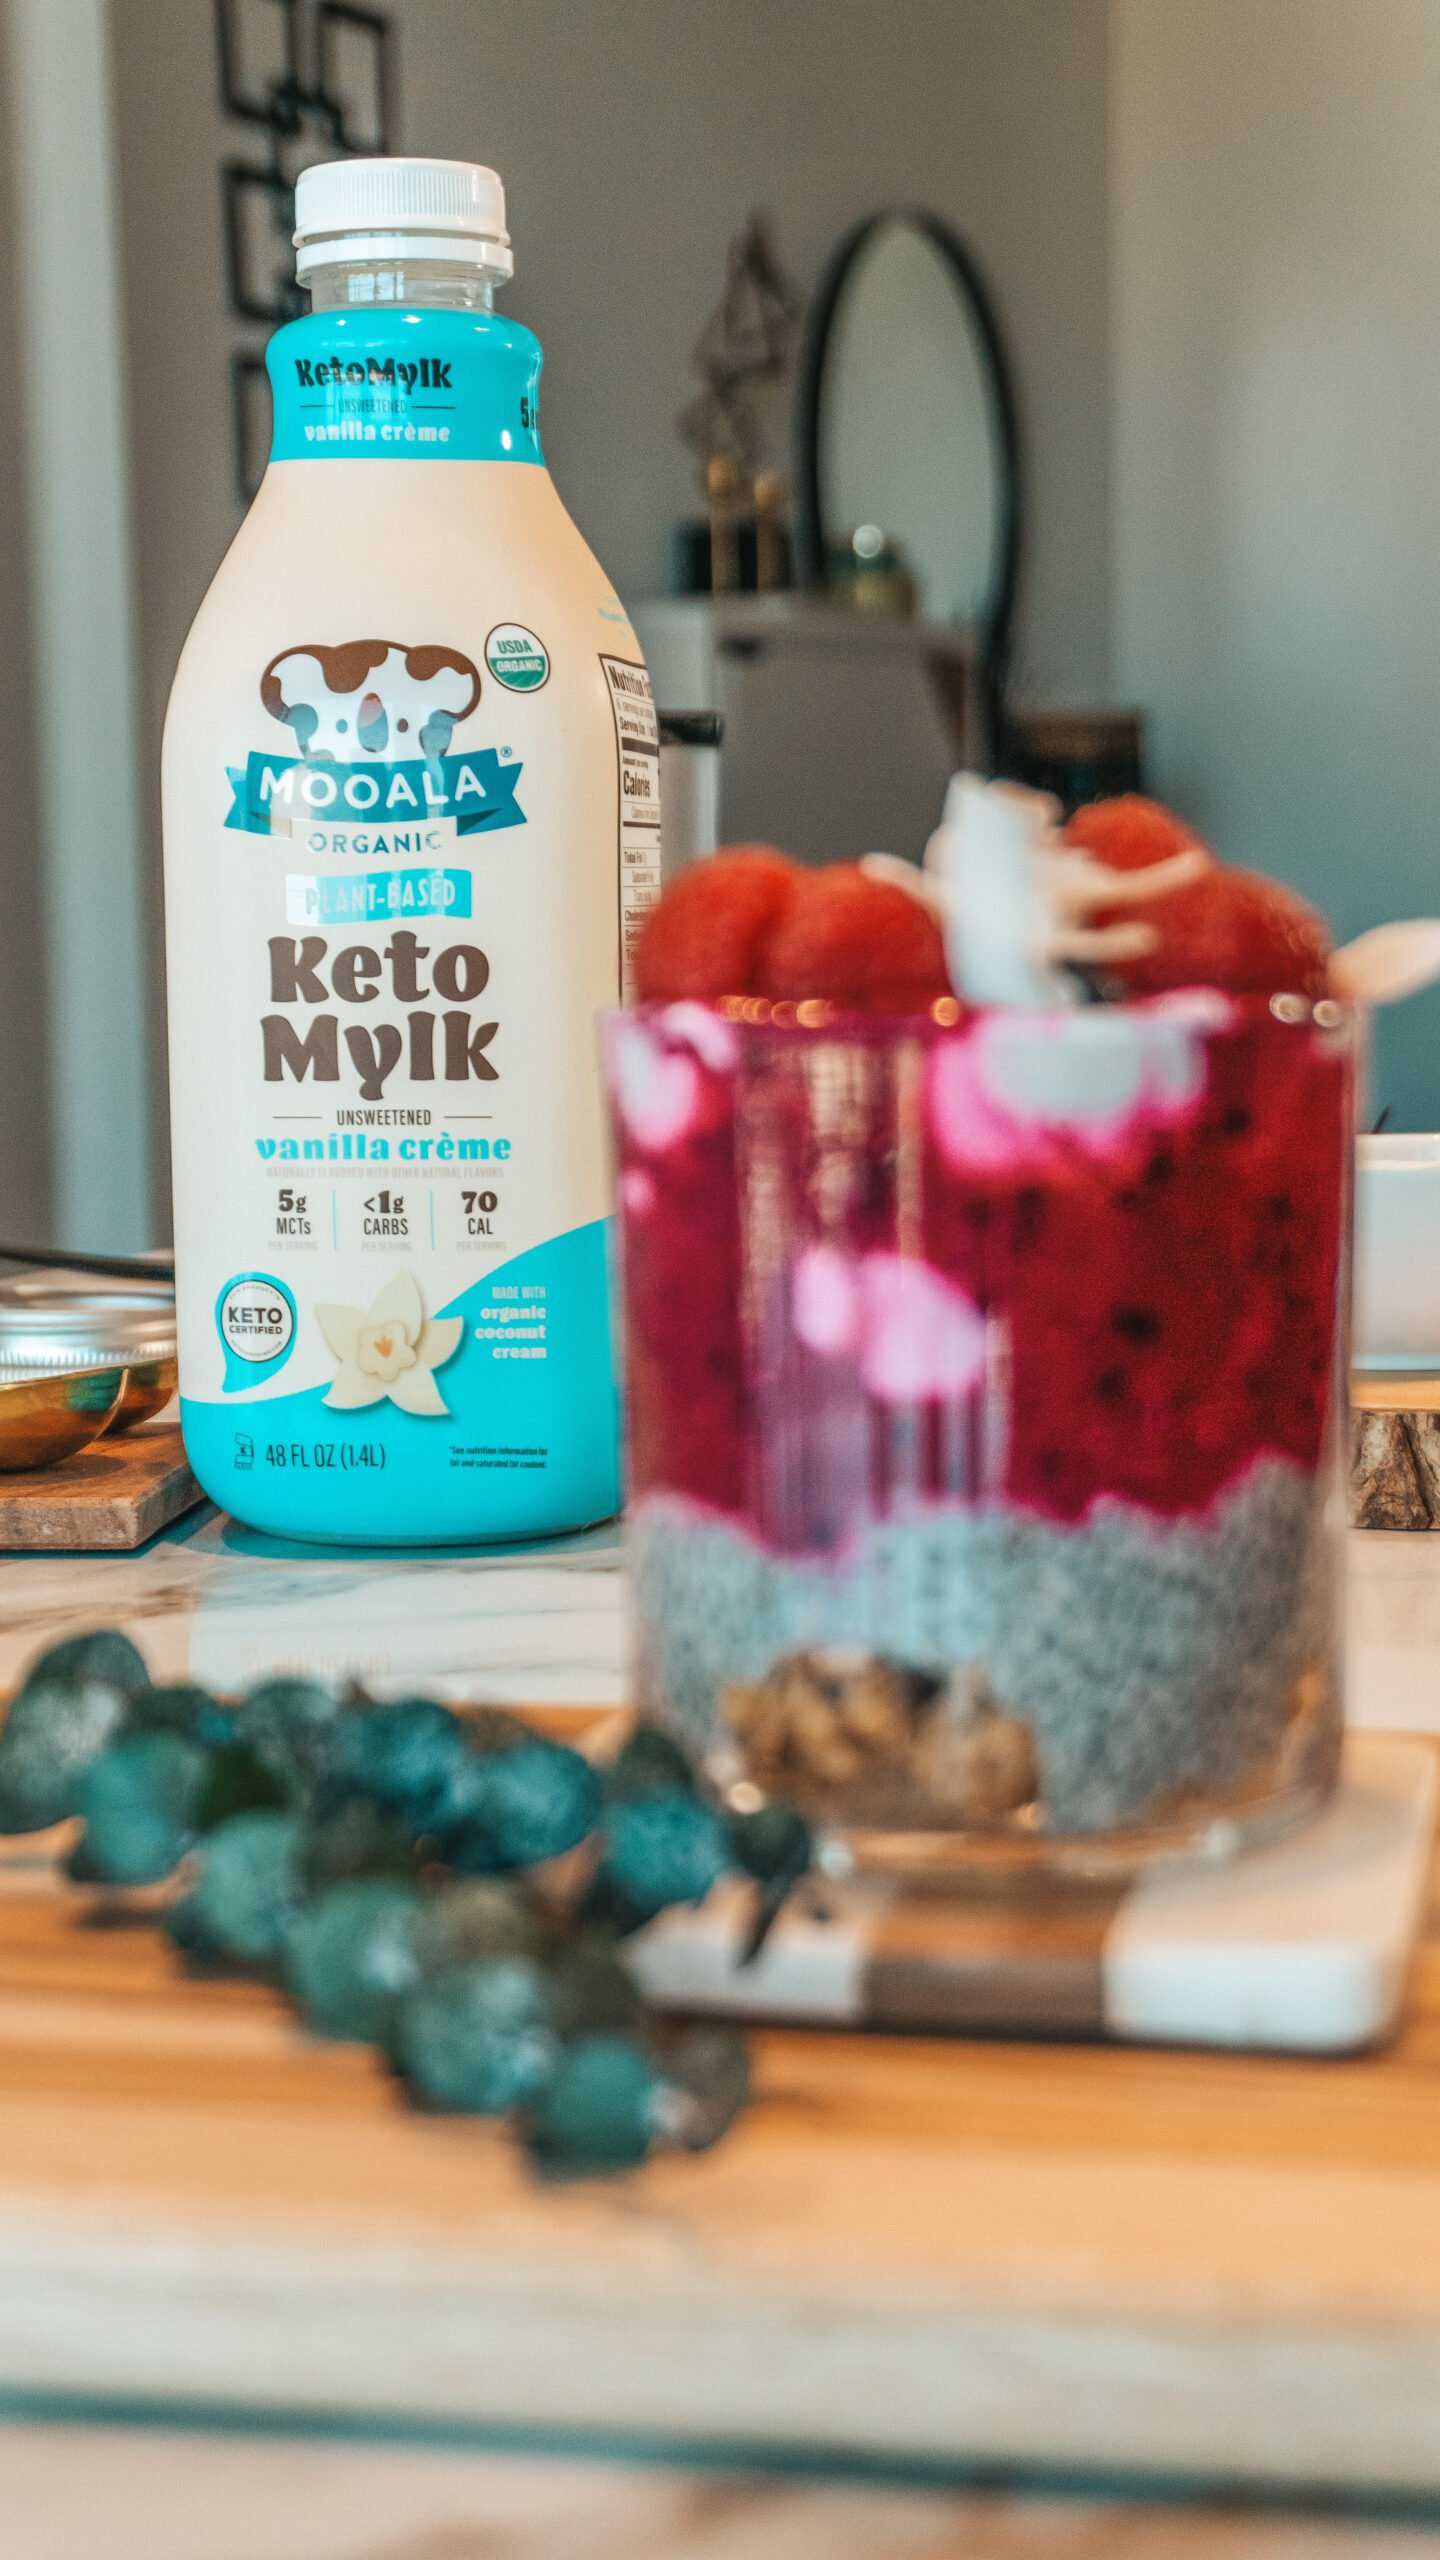 Mooala Keto Mylk Vanilla Creme Organic Unsweetened Plant Based Milk used to maked healthy snacks scaled